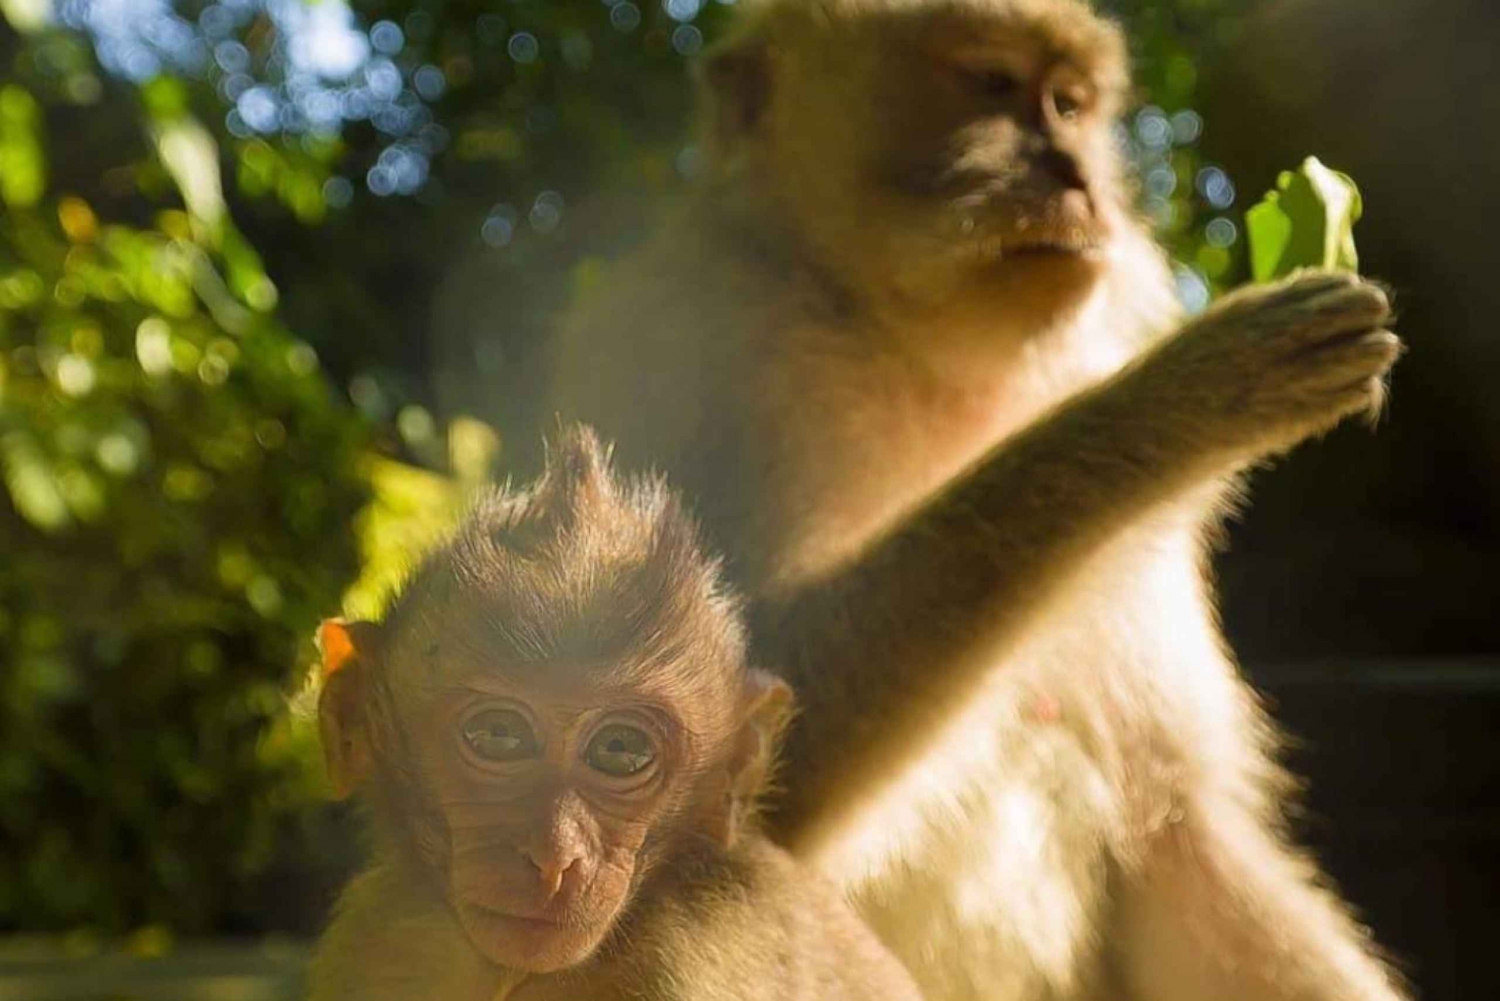 Ubud: Bali Swing, Monkey Forest, Waterfall Tour & Lunch